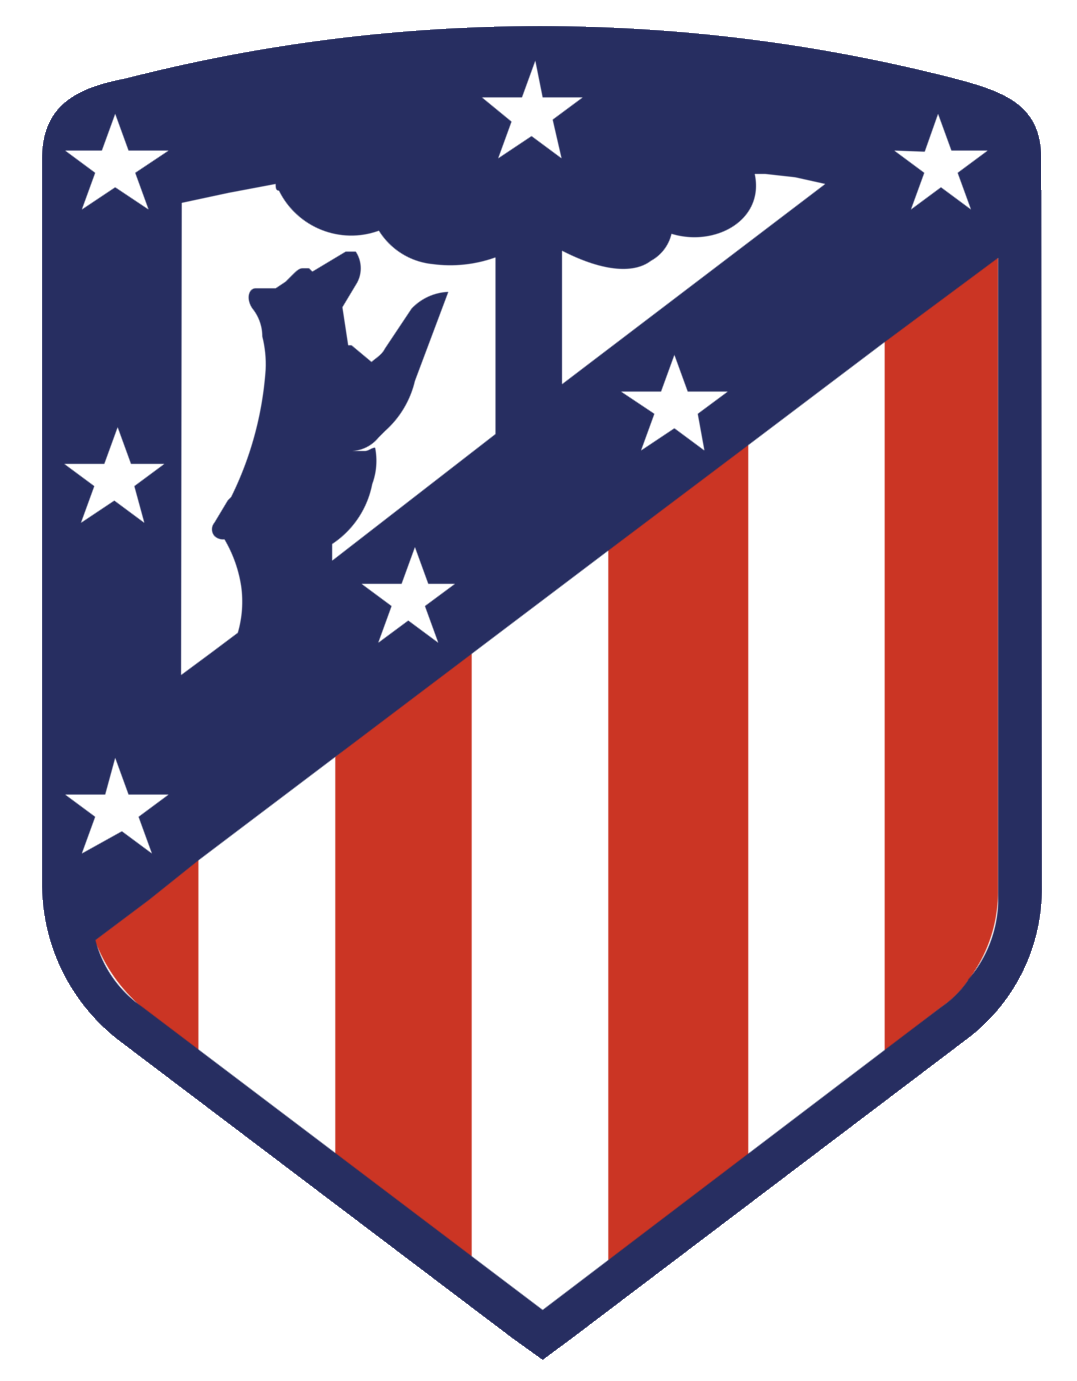 Wappen Club Atlético de Madrid diverse  3129